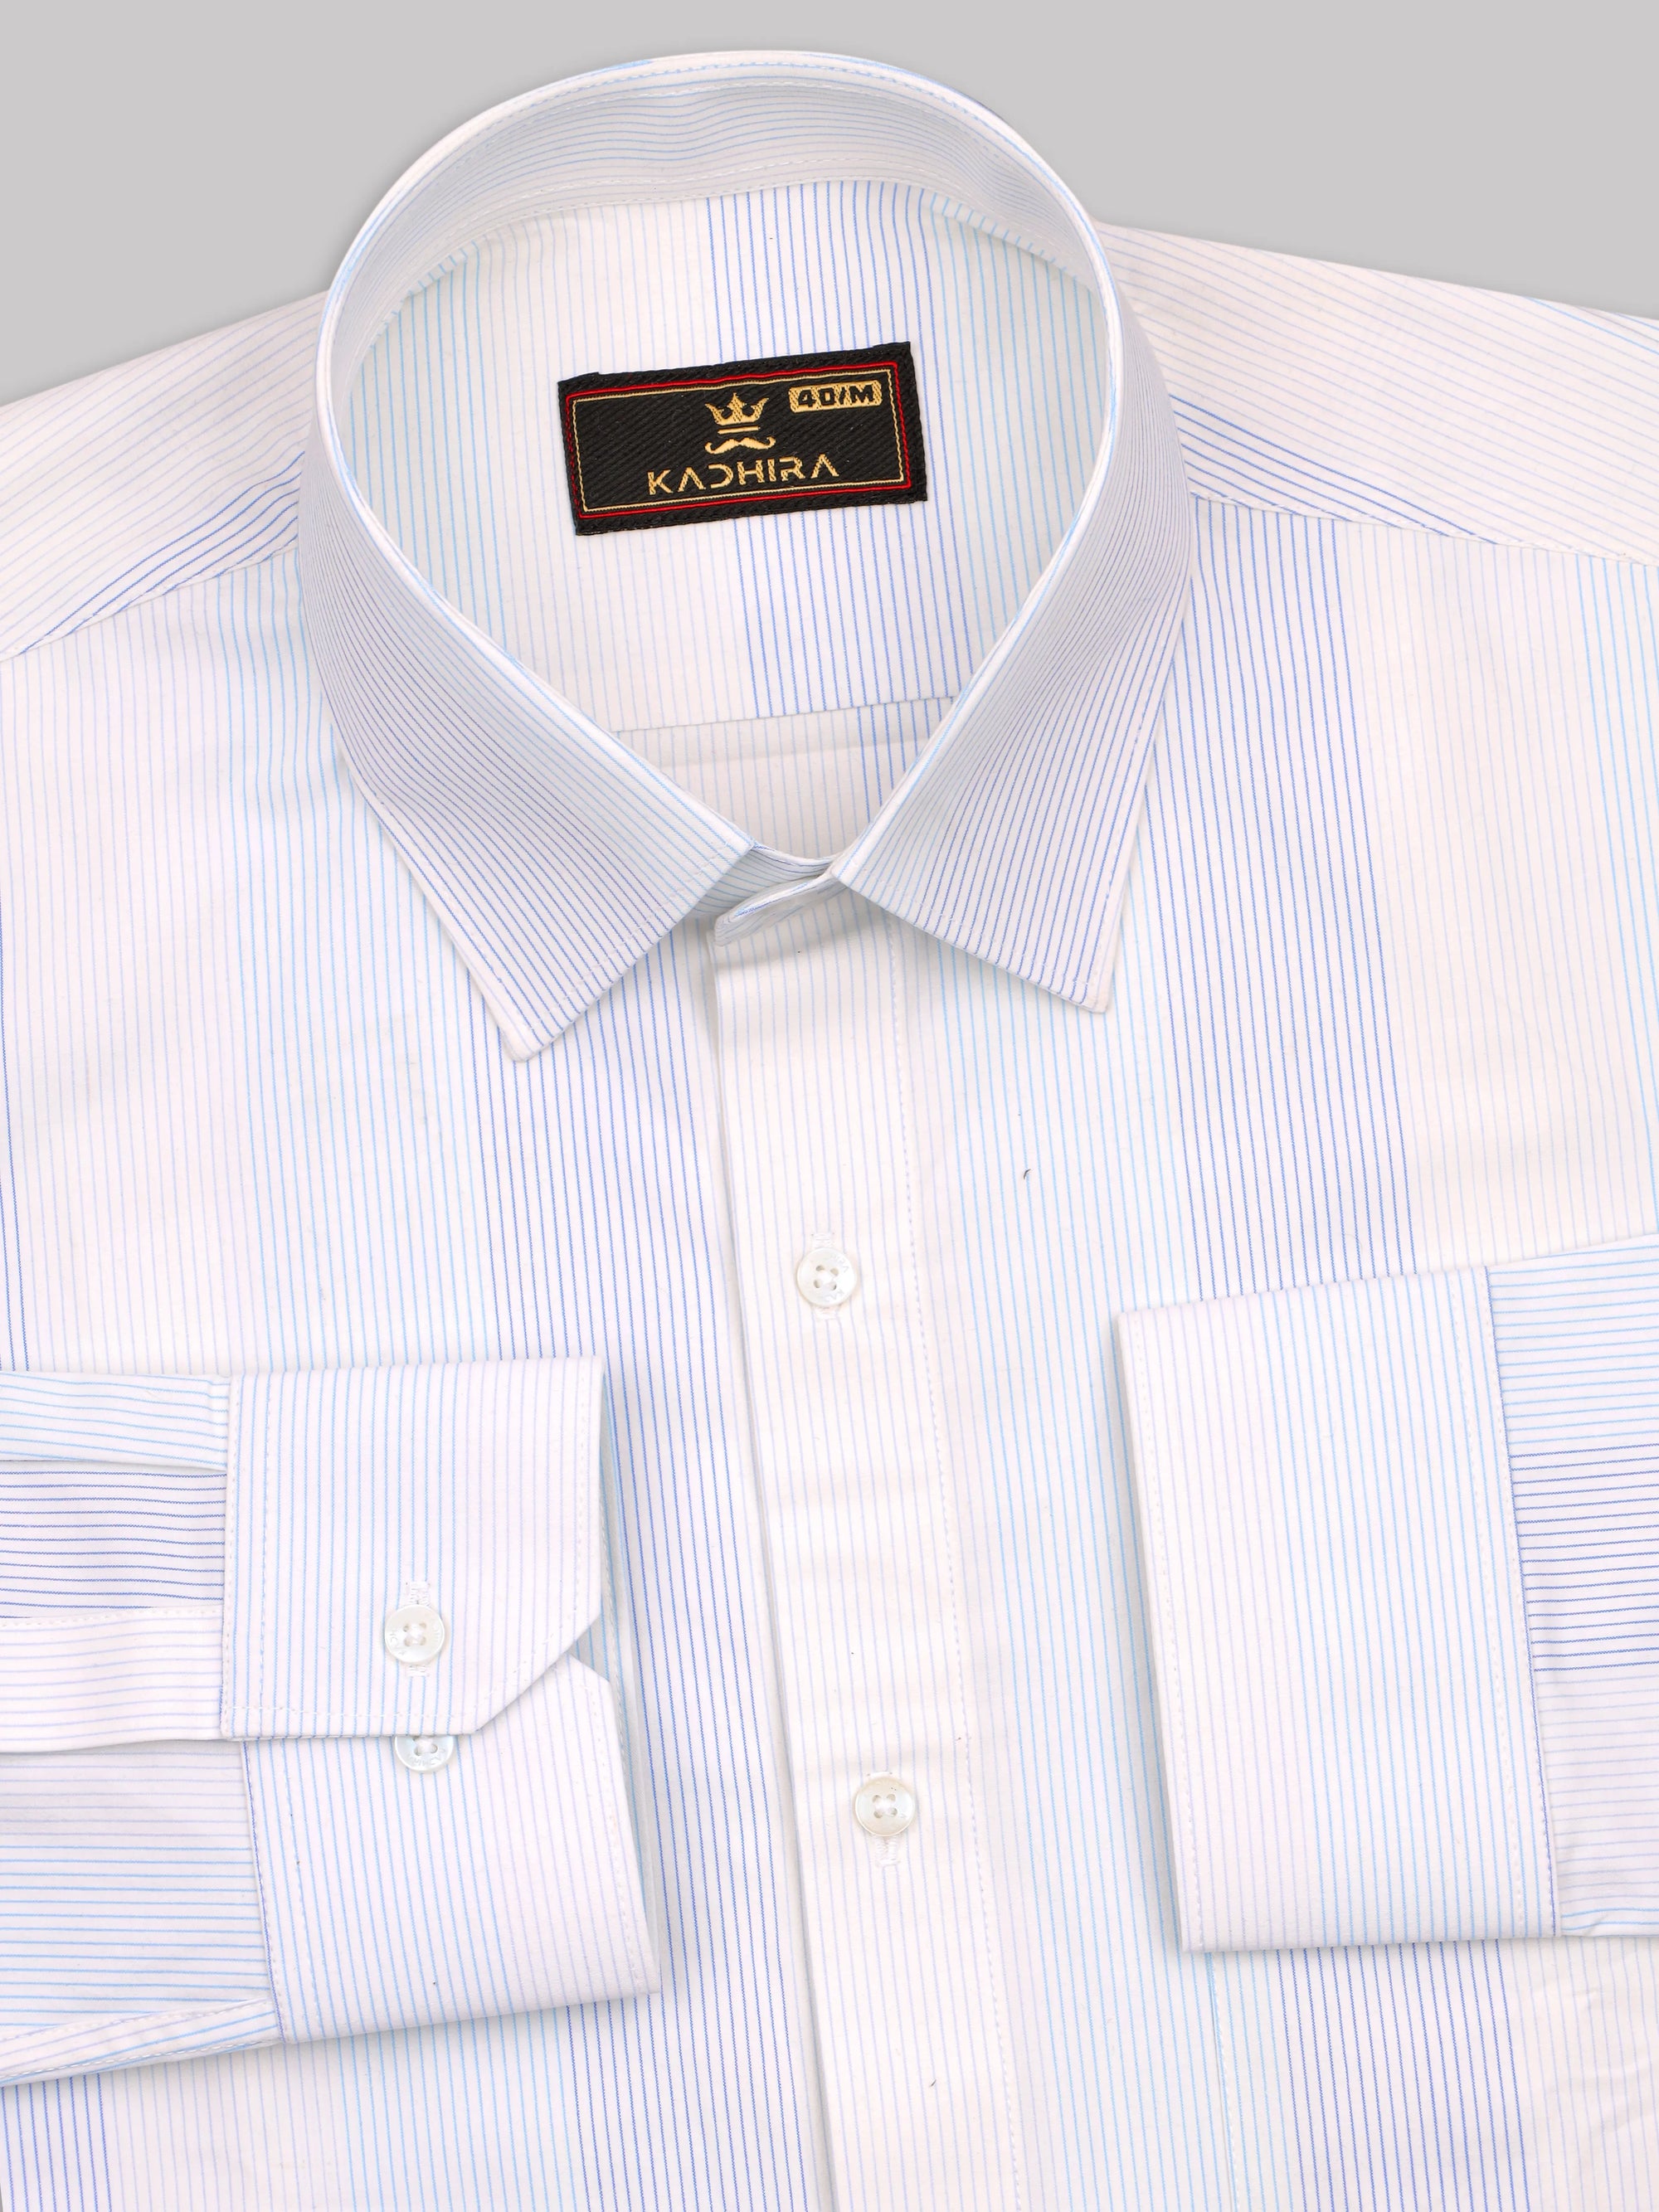 Bright White With Purple-Blue shades Stripe Oxford Cotton Shirt